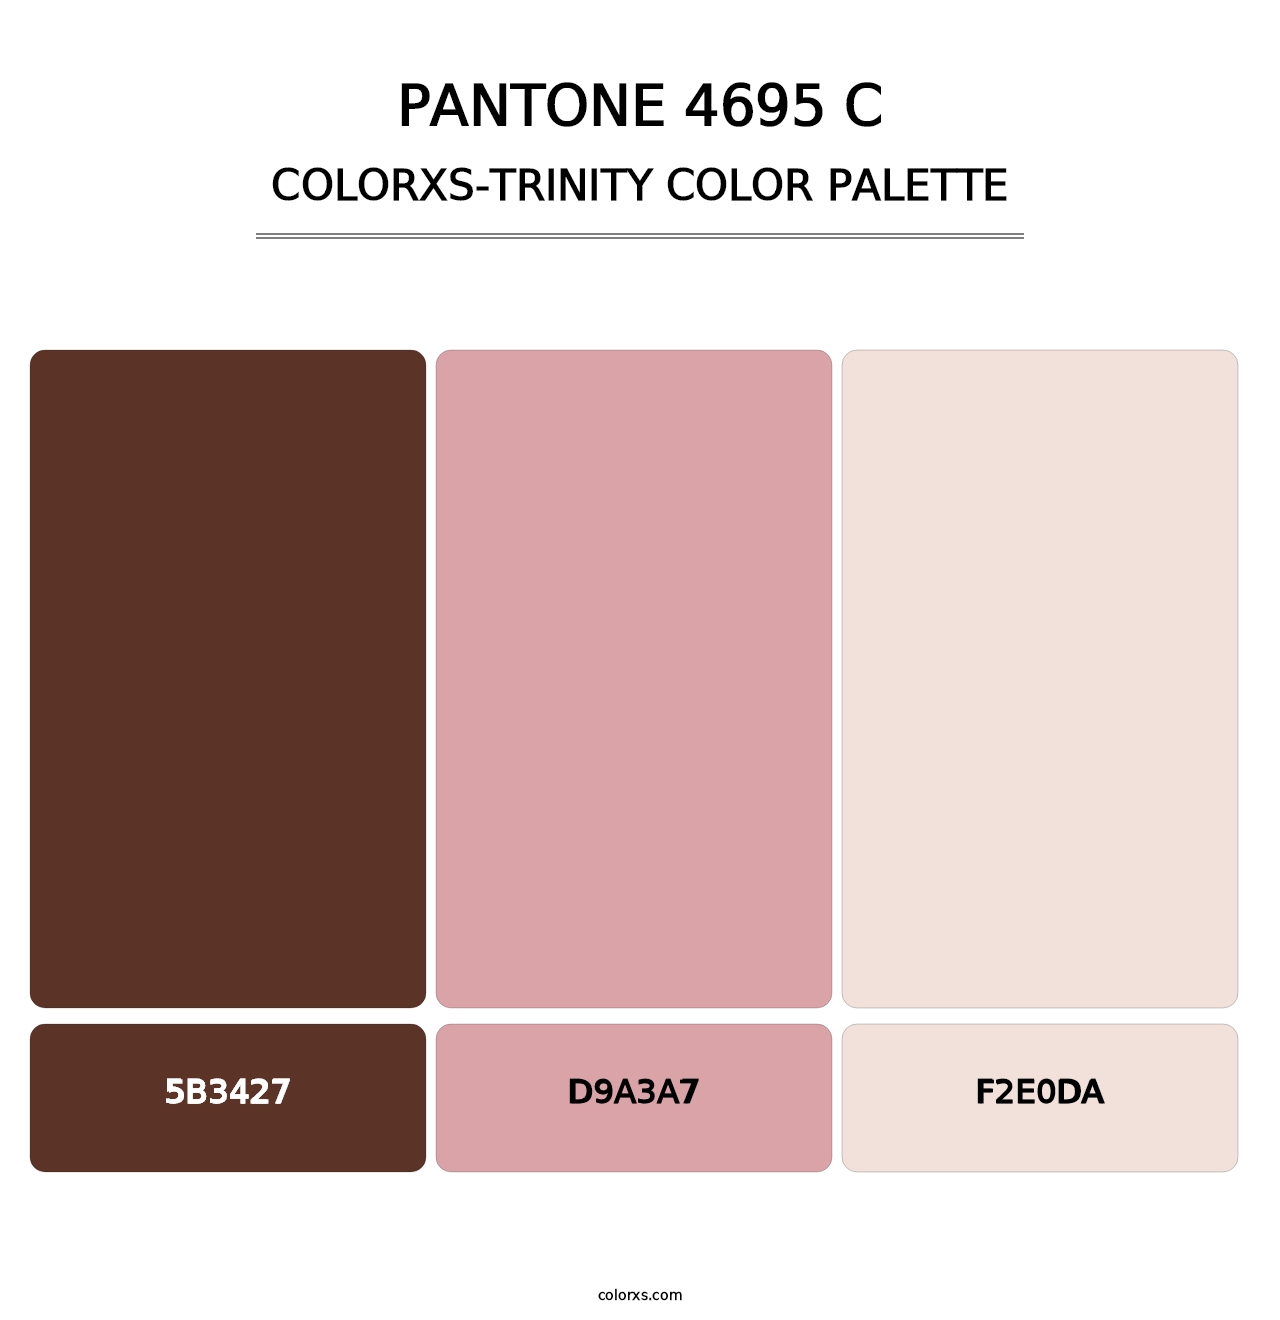 PANTONE 4695 C - Colorxs Trinity Palette